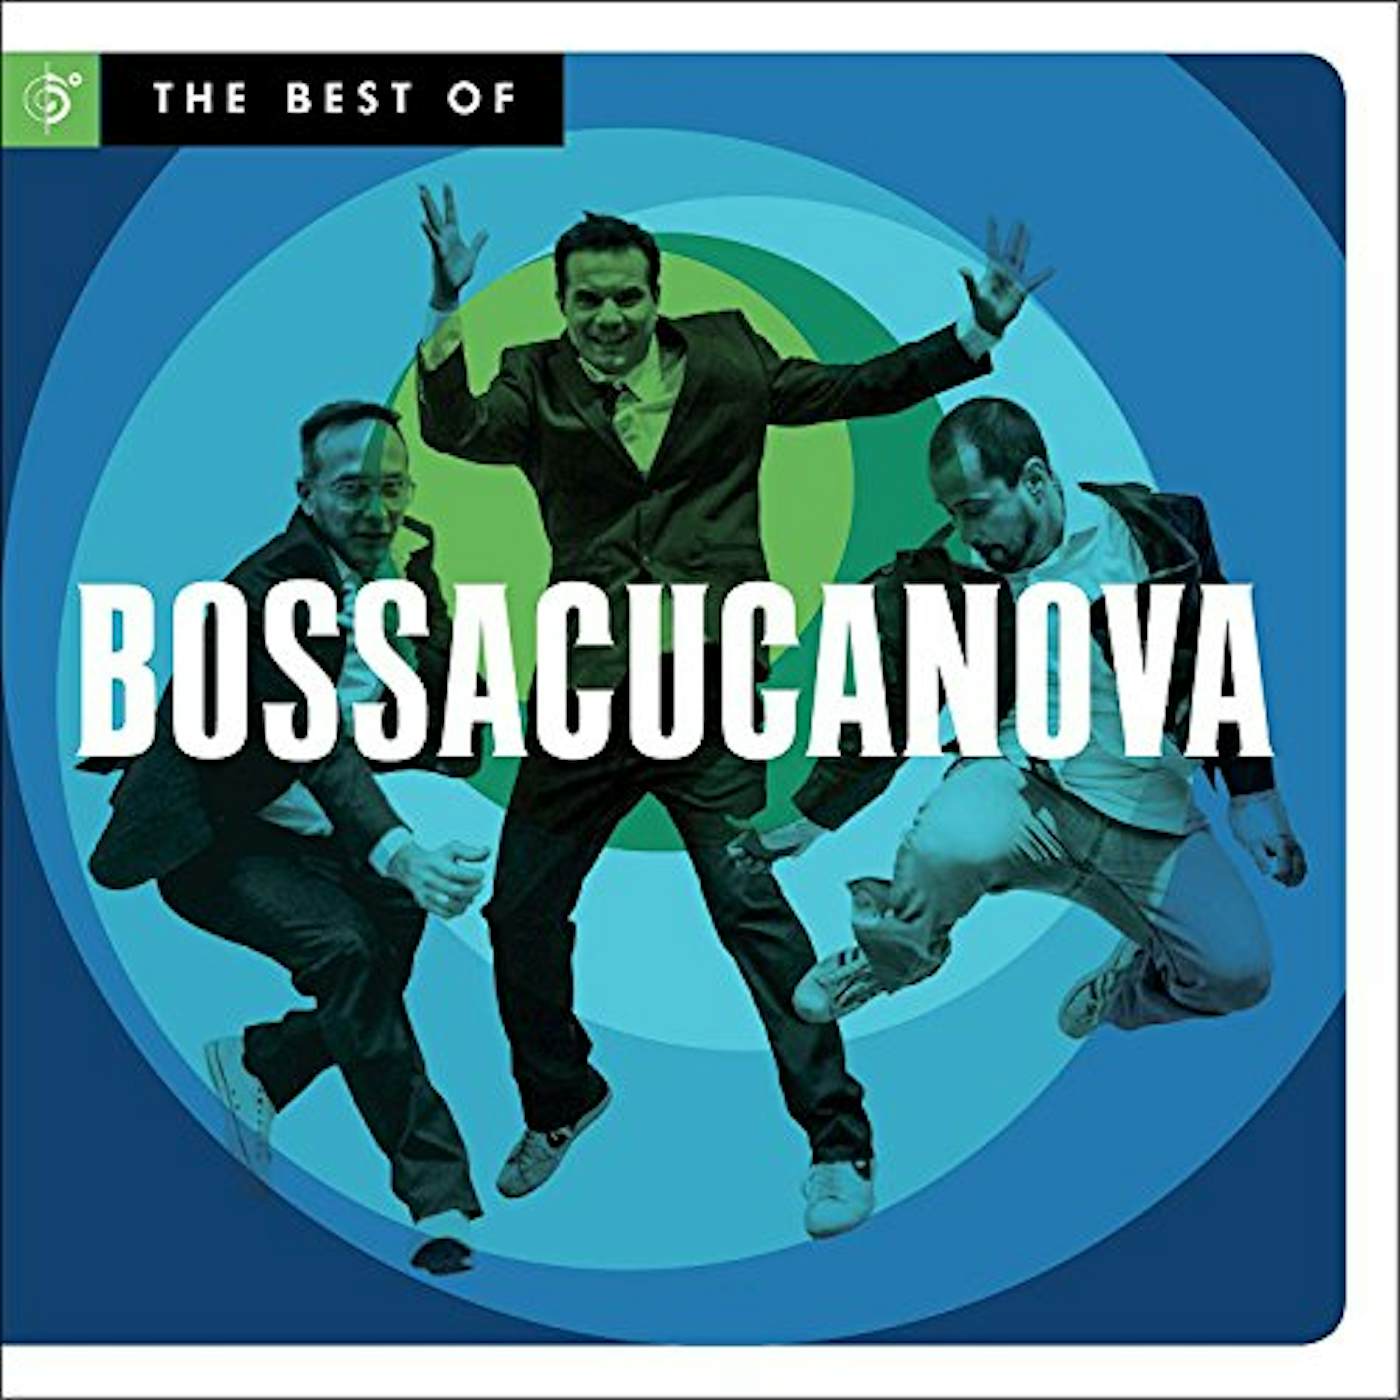 BEST OF BOSSACUCANOVA CD